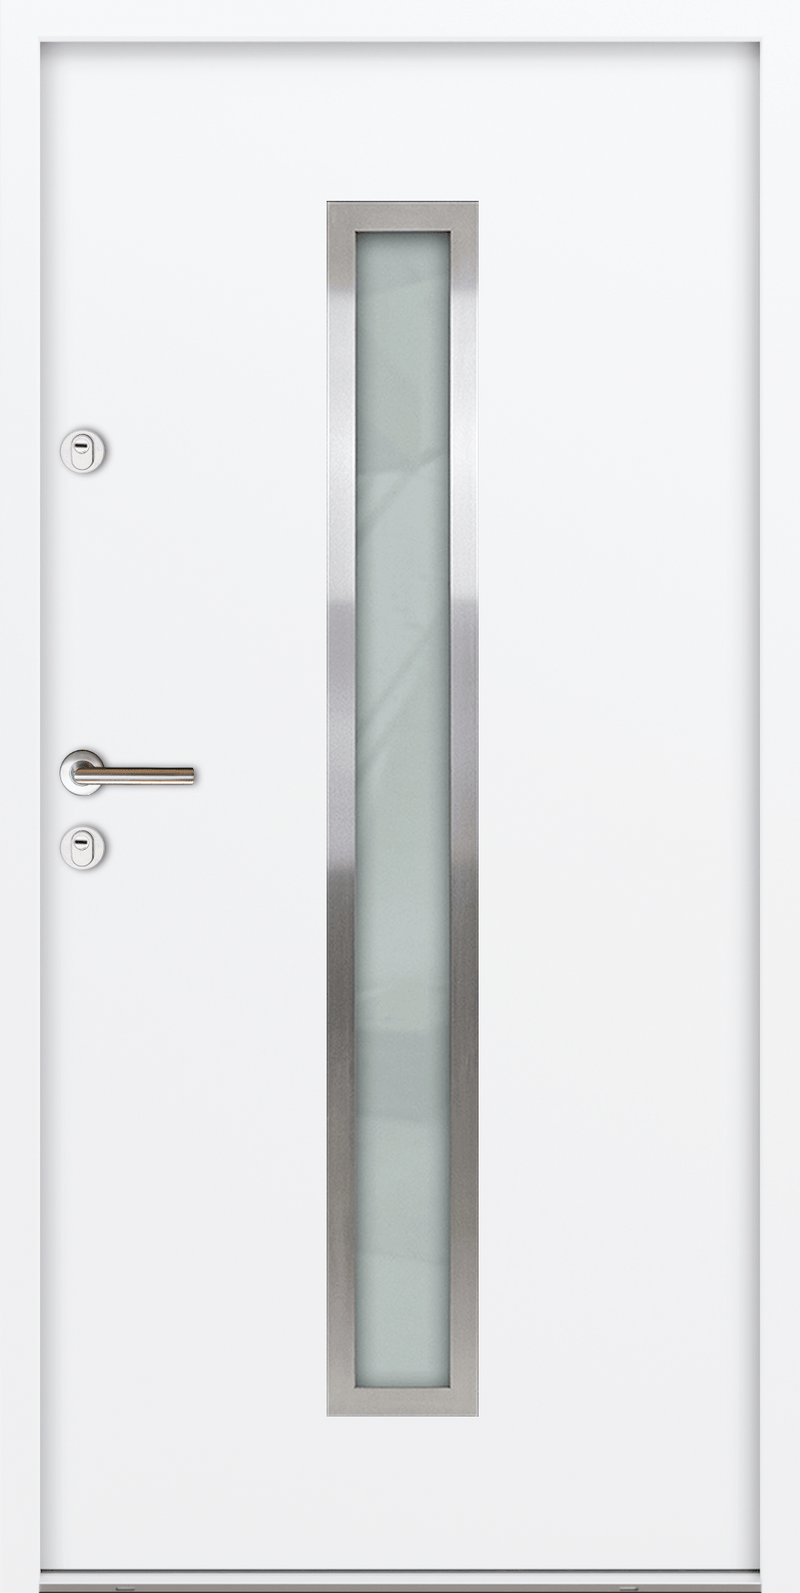 Turenwerke ATU 68 Design 600 Steel Door - White